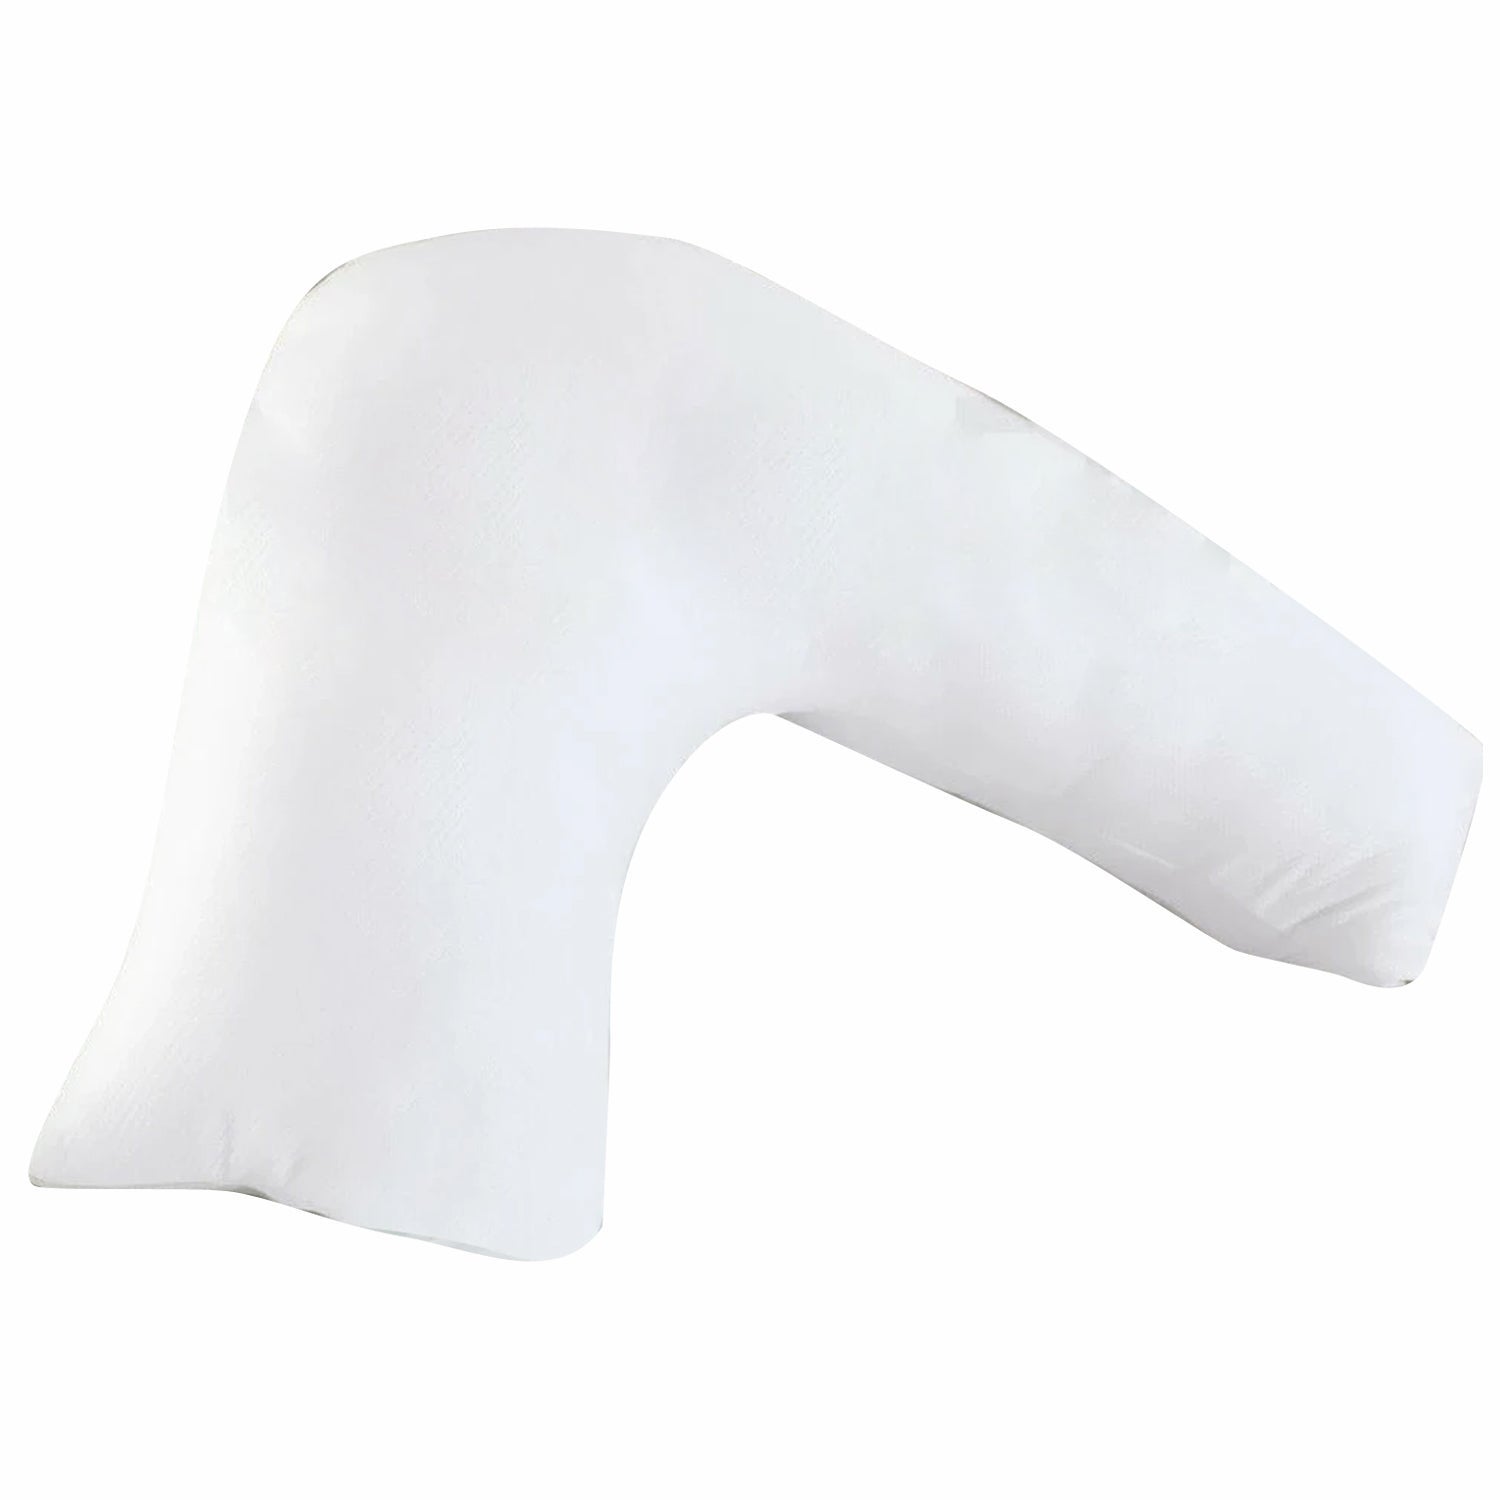 2x Aus Made Tri Boomerang V Shape Maternity Nursing Pregnancy Pillow Cotton